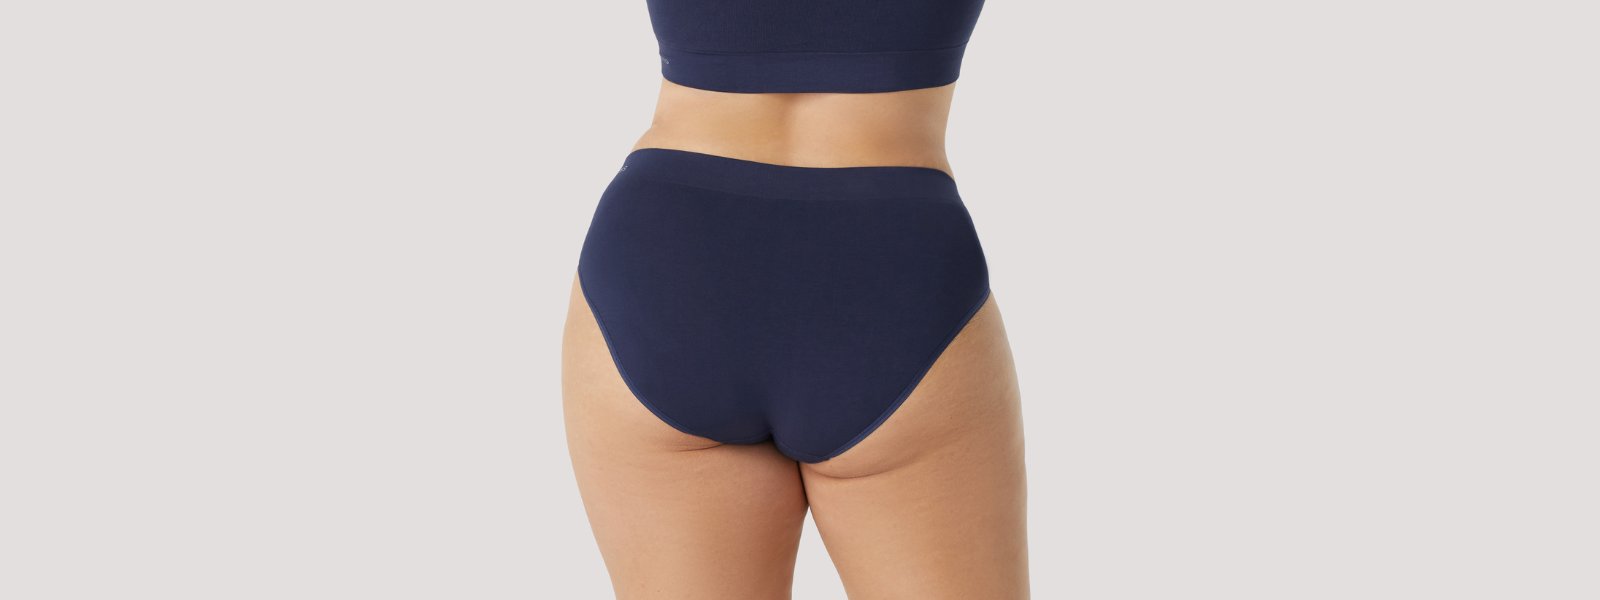 Women's Bamboo High Waist Underwear, Boy Leg Underwear and Shaping Bamboo Underwear | Bella Bodies Australia